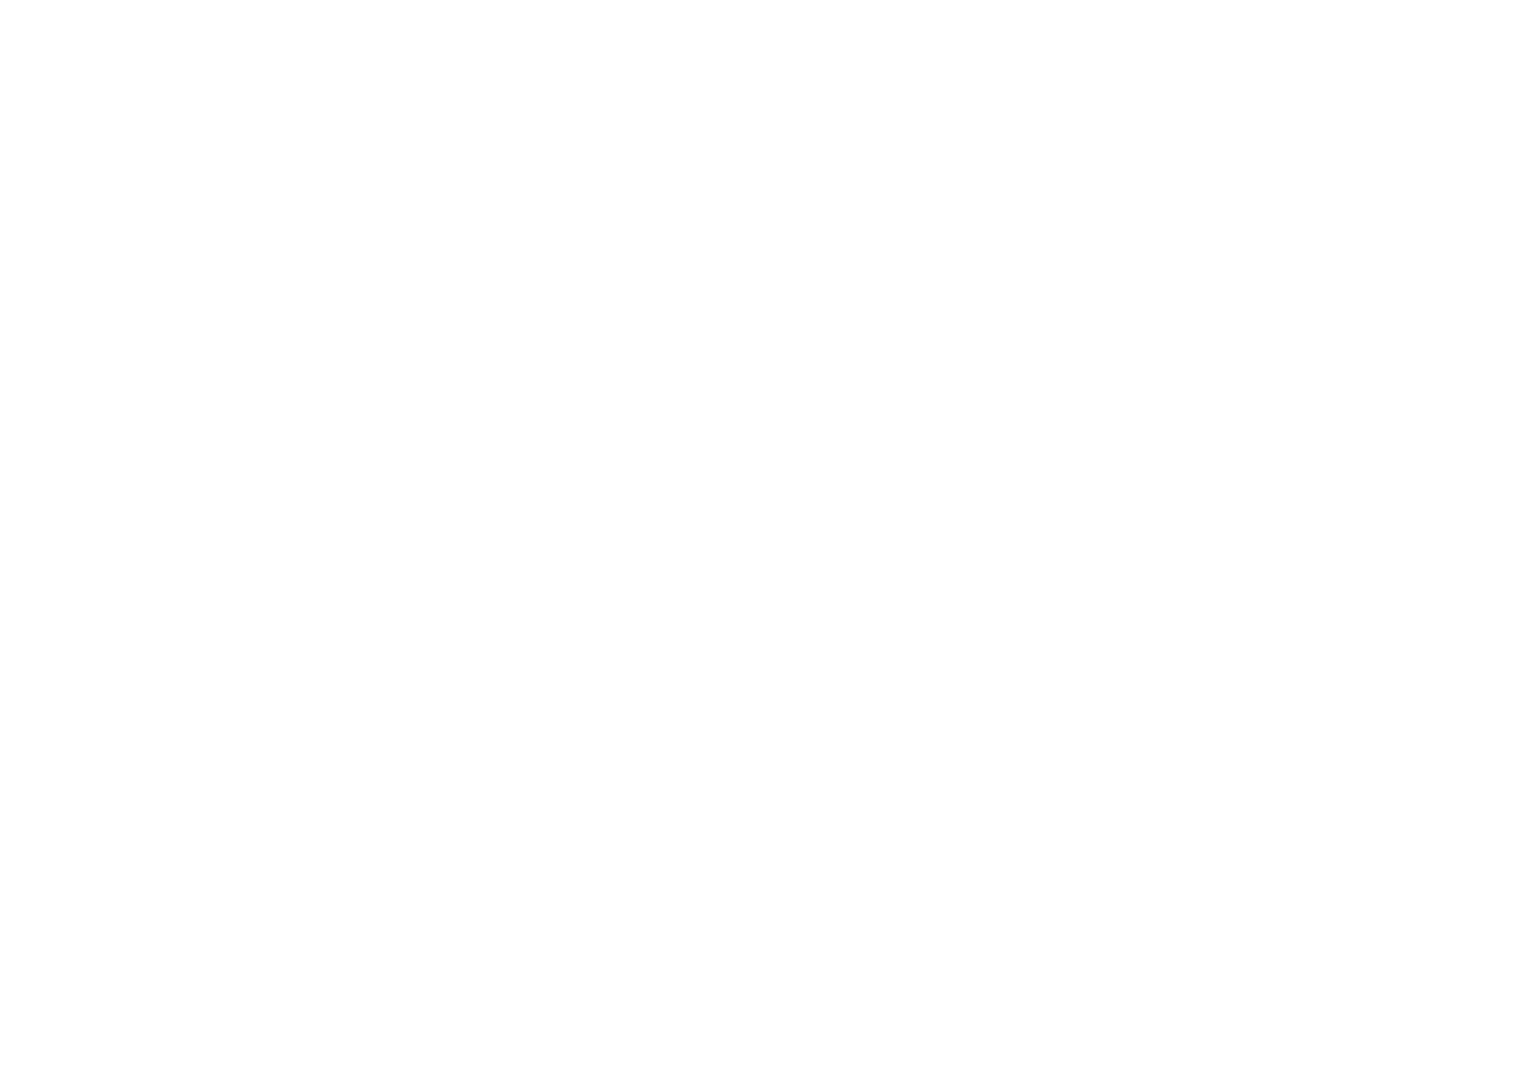 Charter Communications logo for dark backgrounds (transparent PNG)